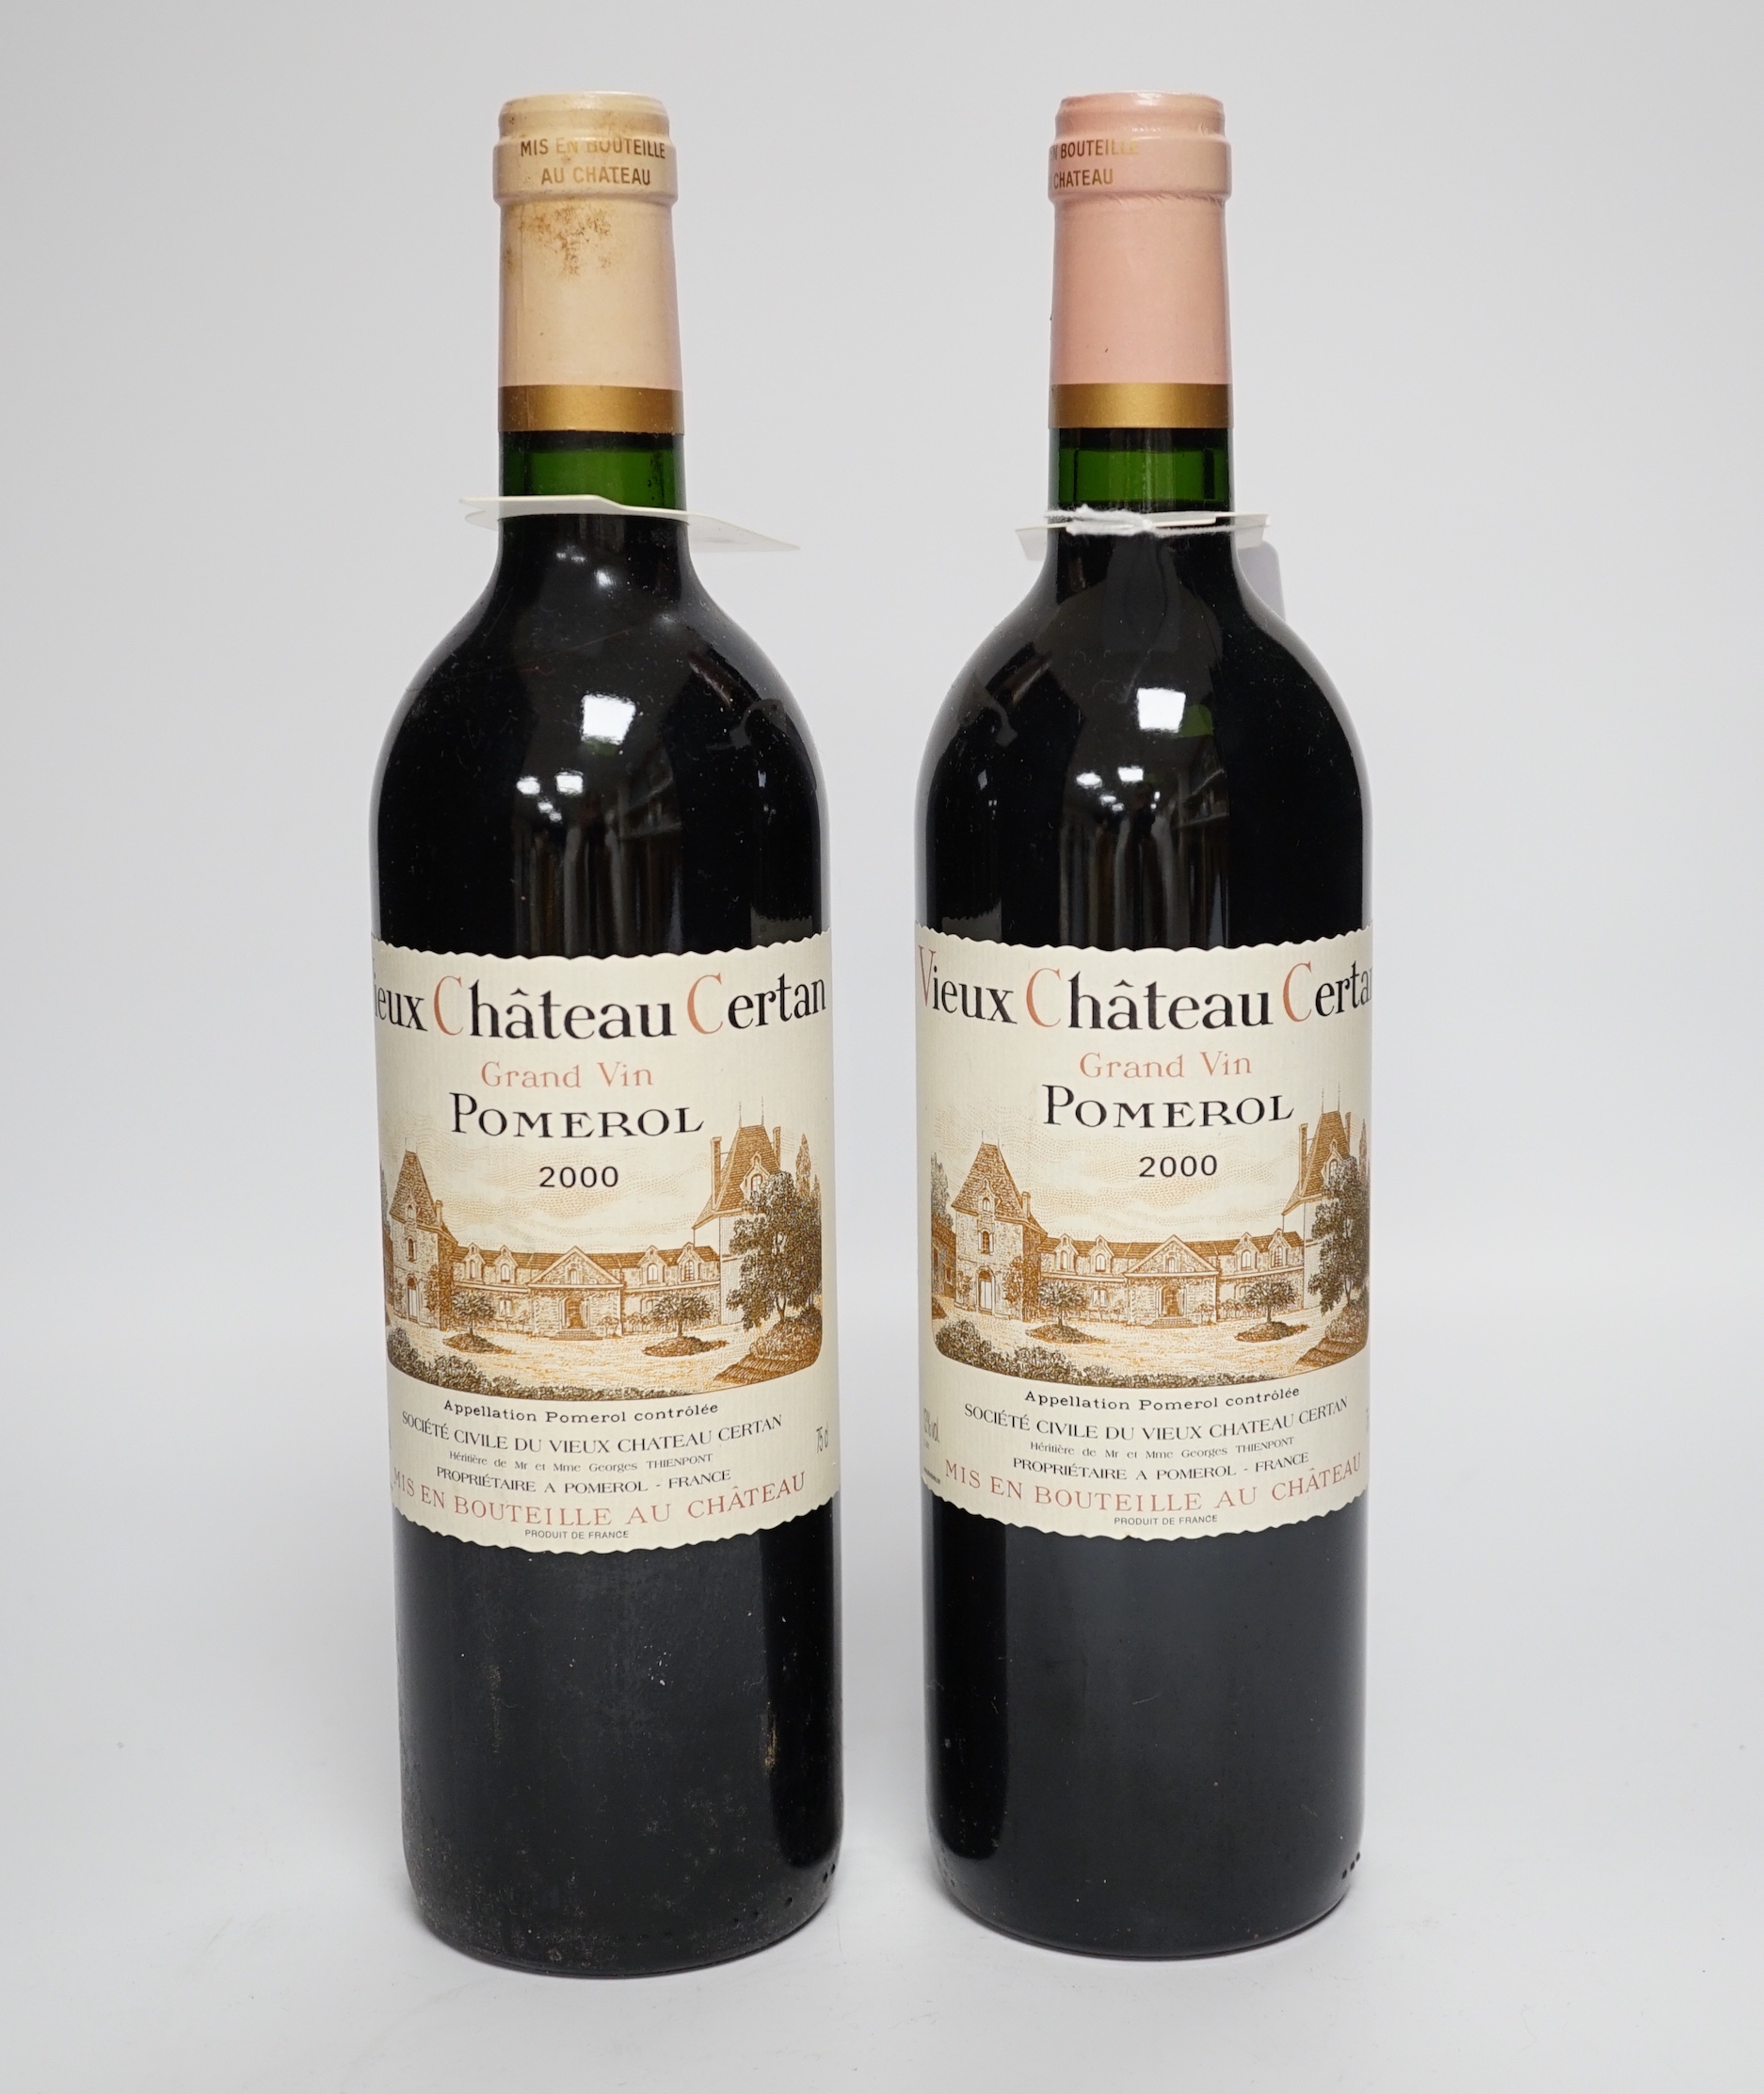 Two bottles of Vieux Chateau Certan Grand Vin Pomerol 2000